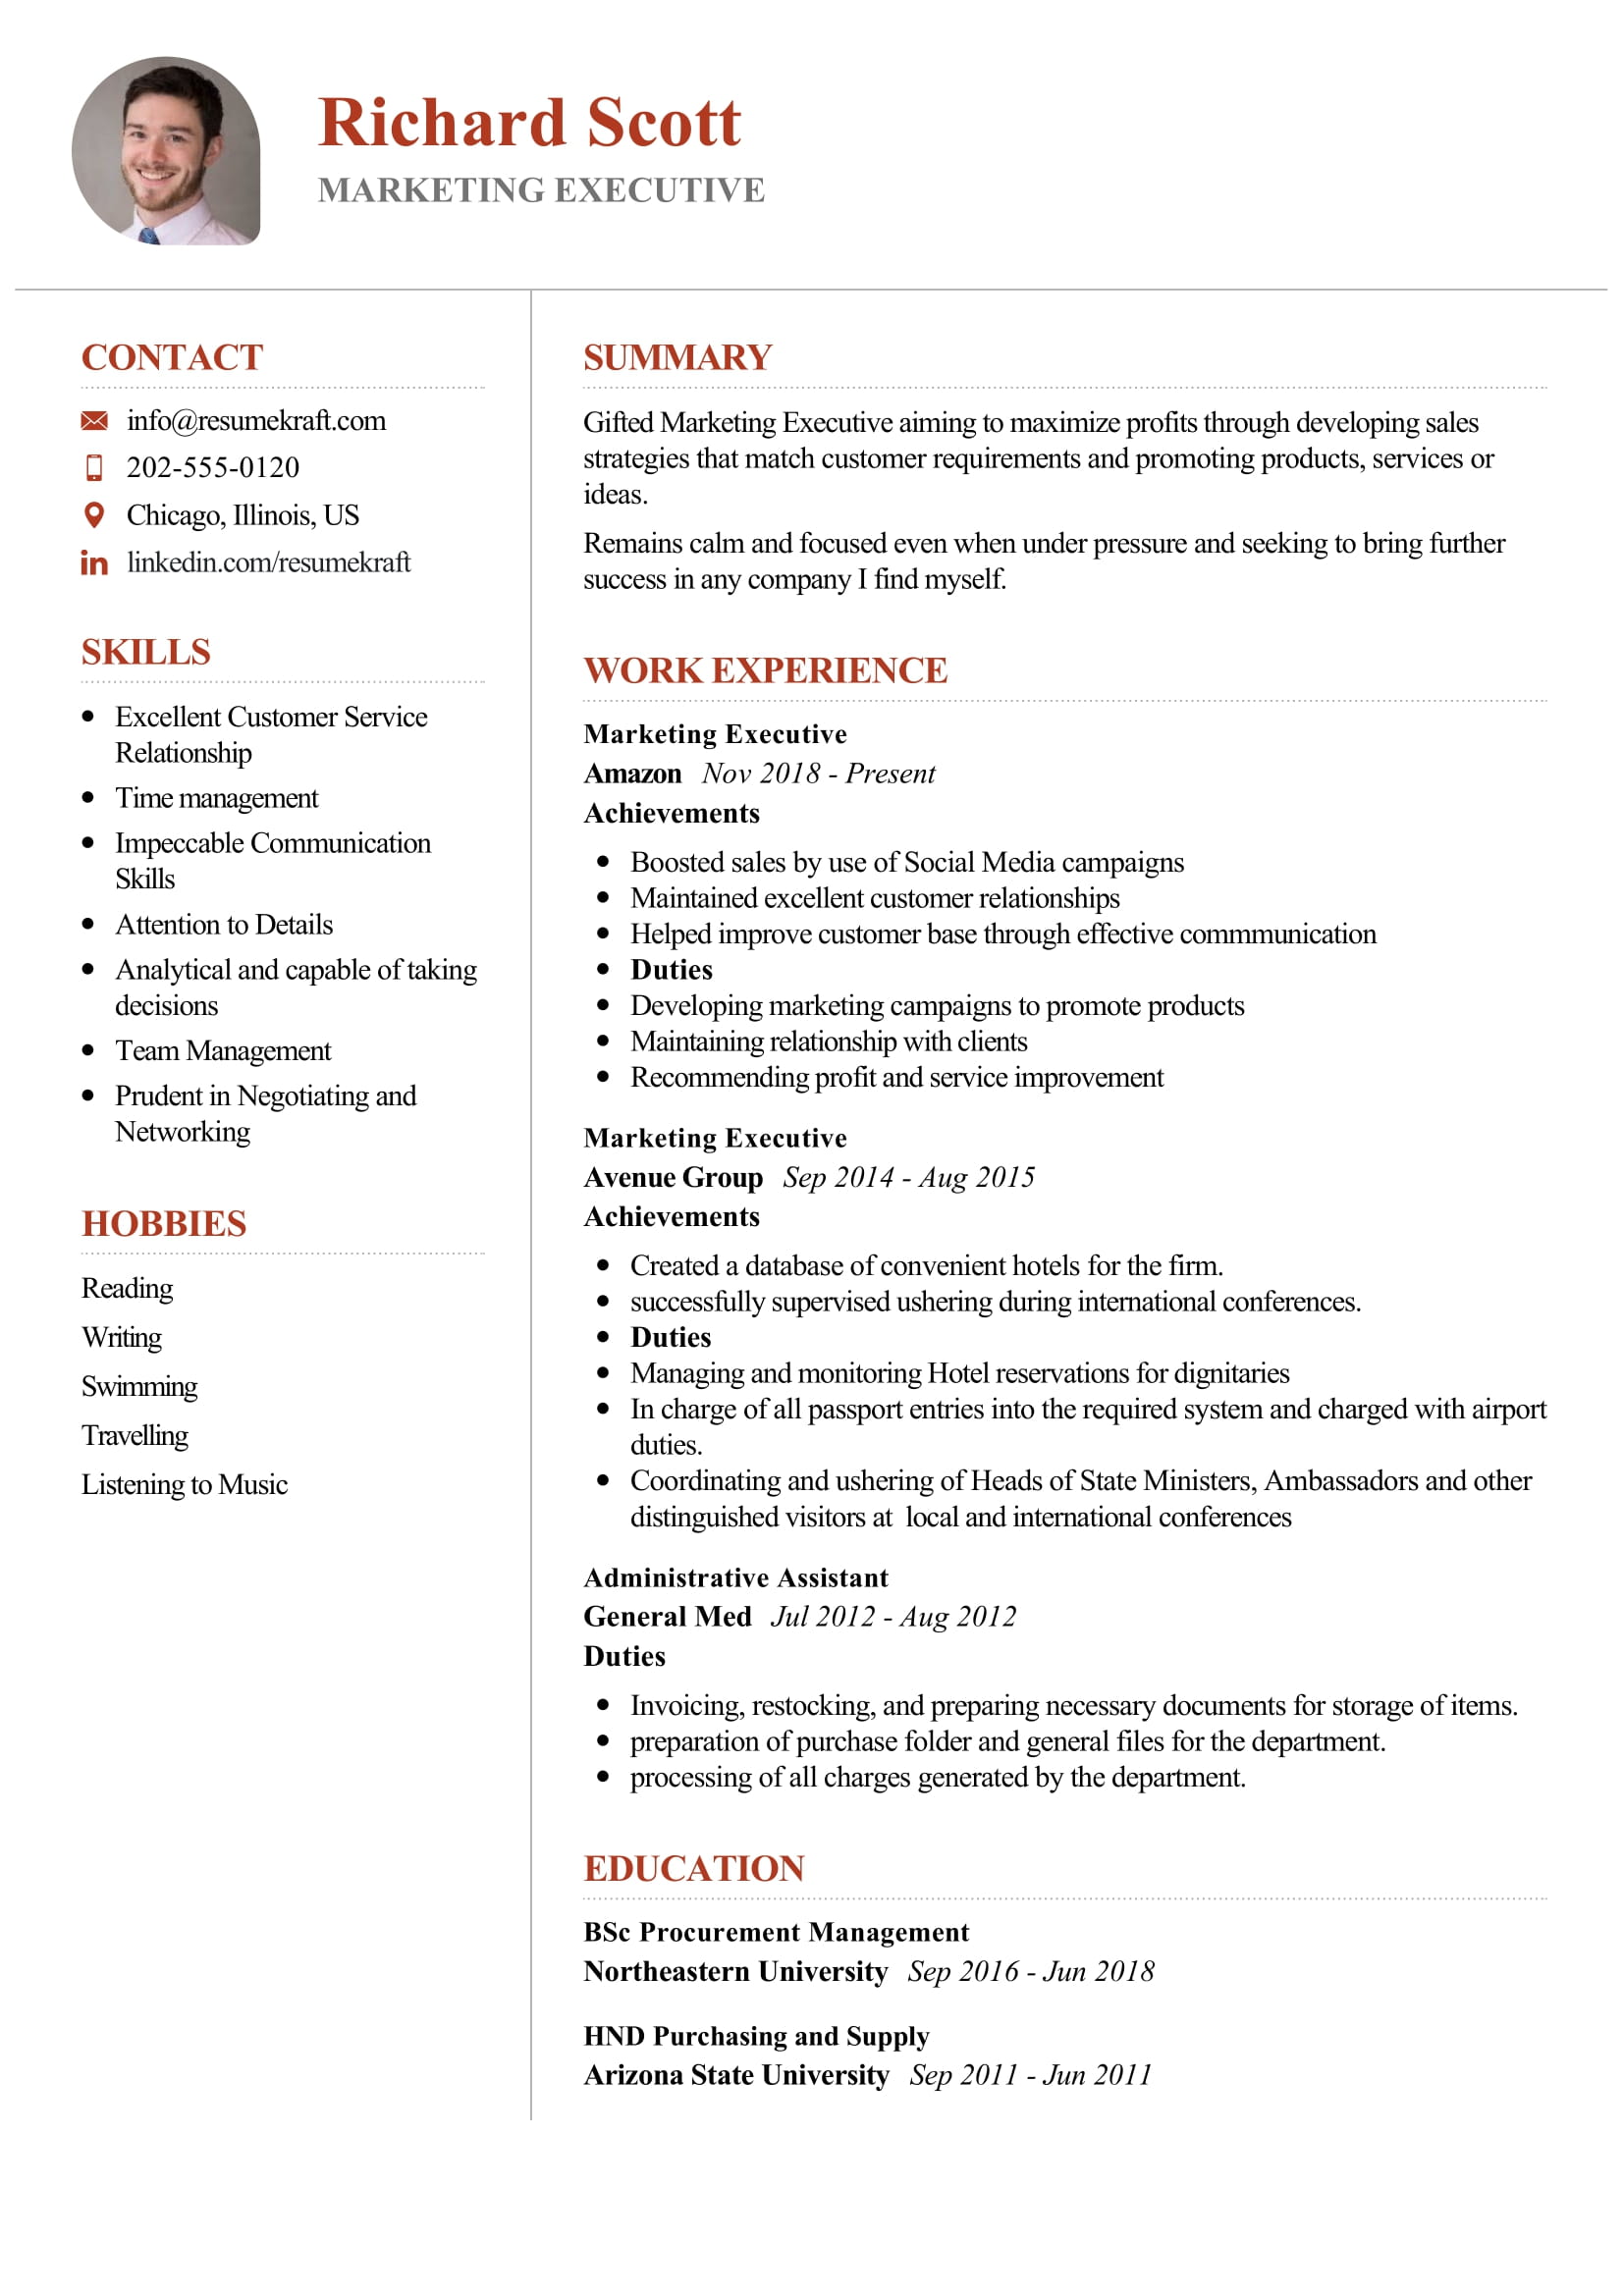 resume sample for marketing executive